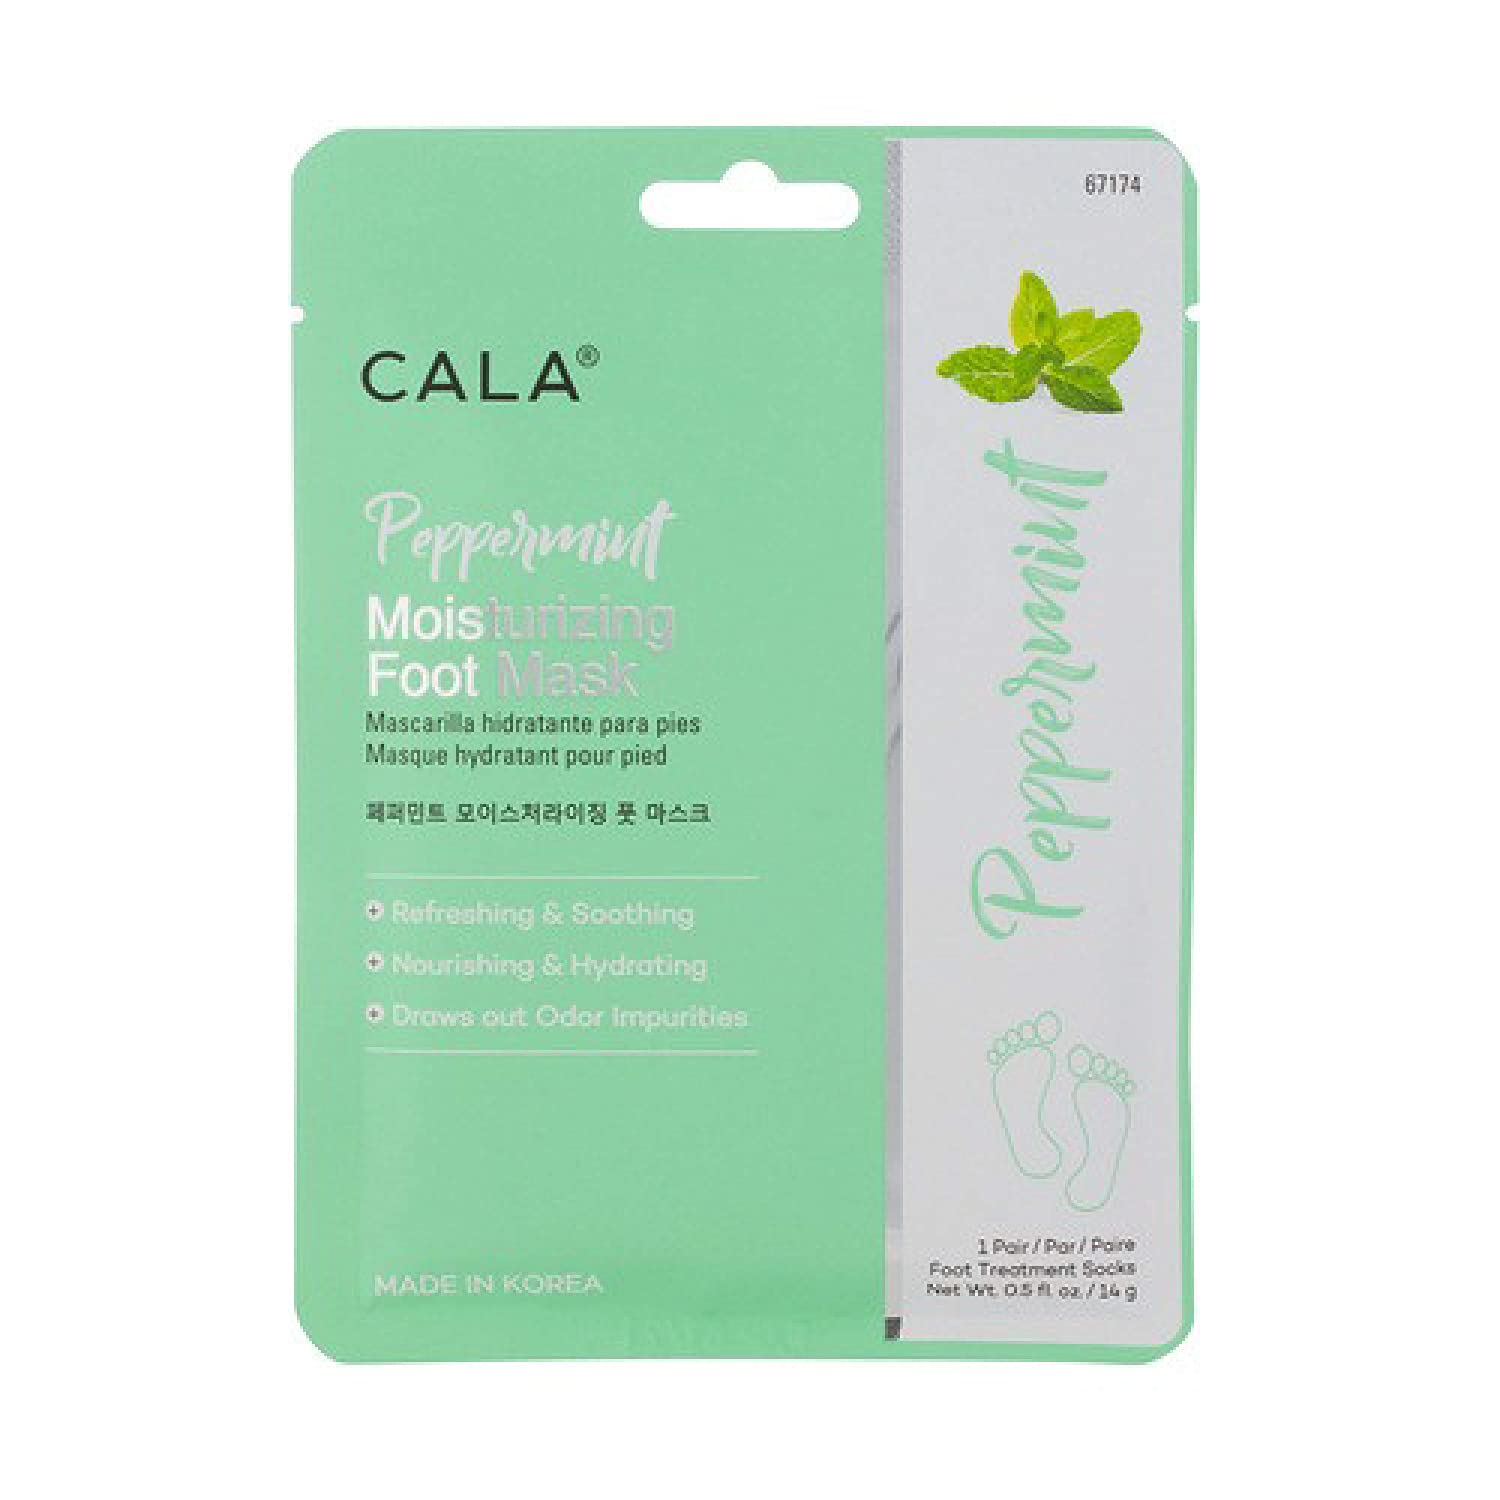 Cala Peppermint moisturizing foot masks (3 Count) (67174)